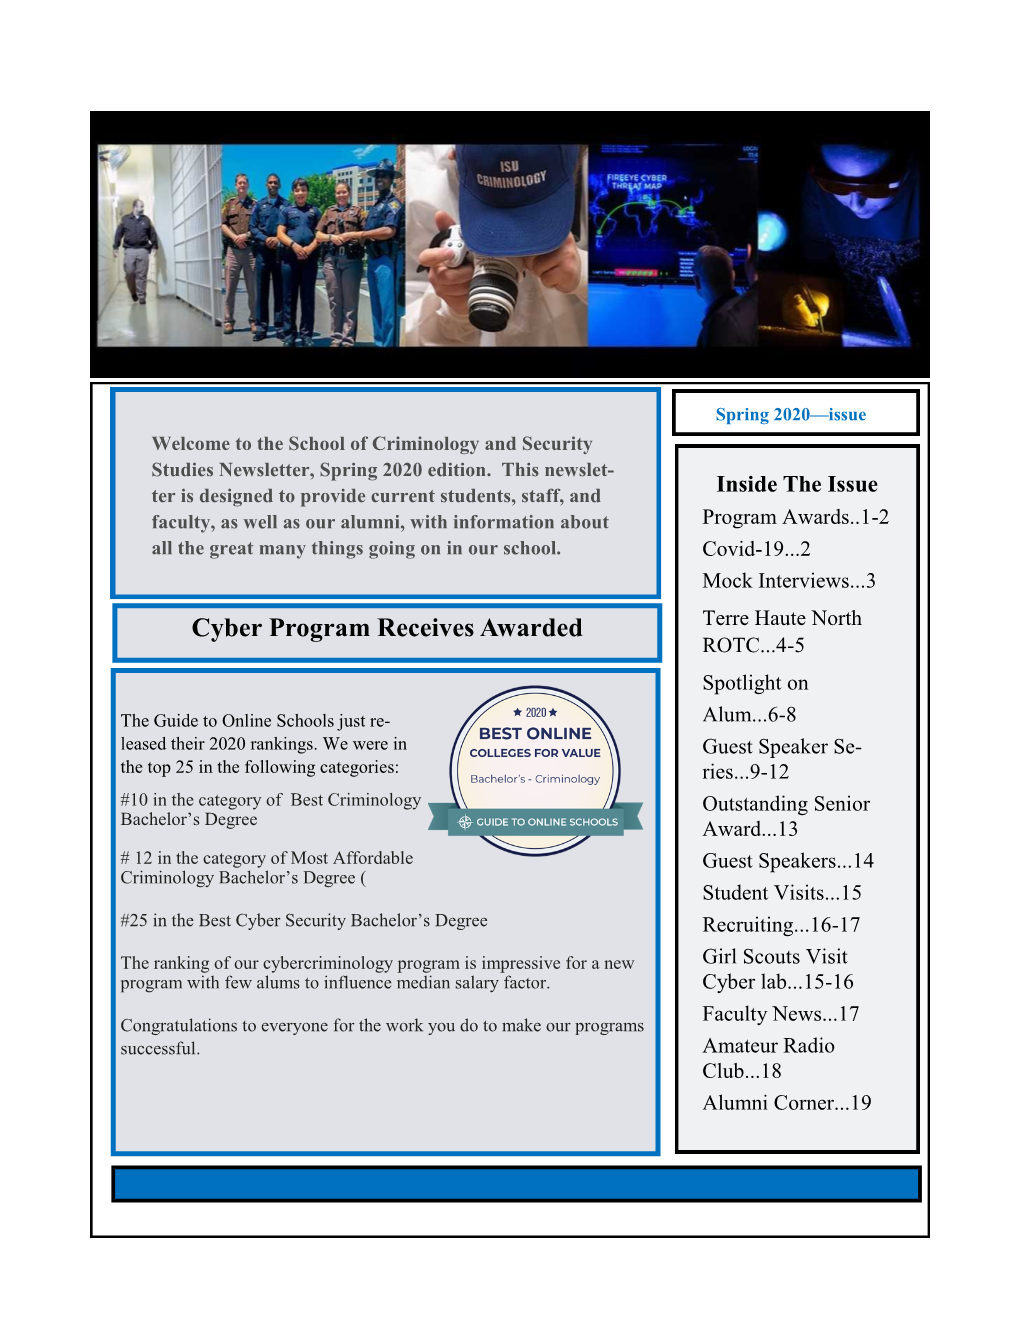 Cyber Program Receives Awarded Terre Haute North ROTC...4-5